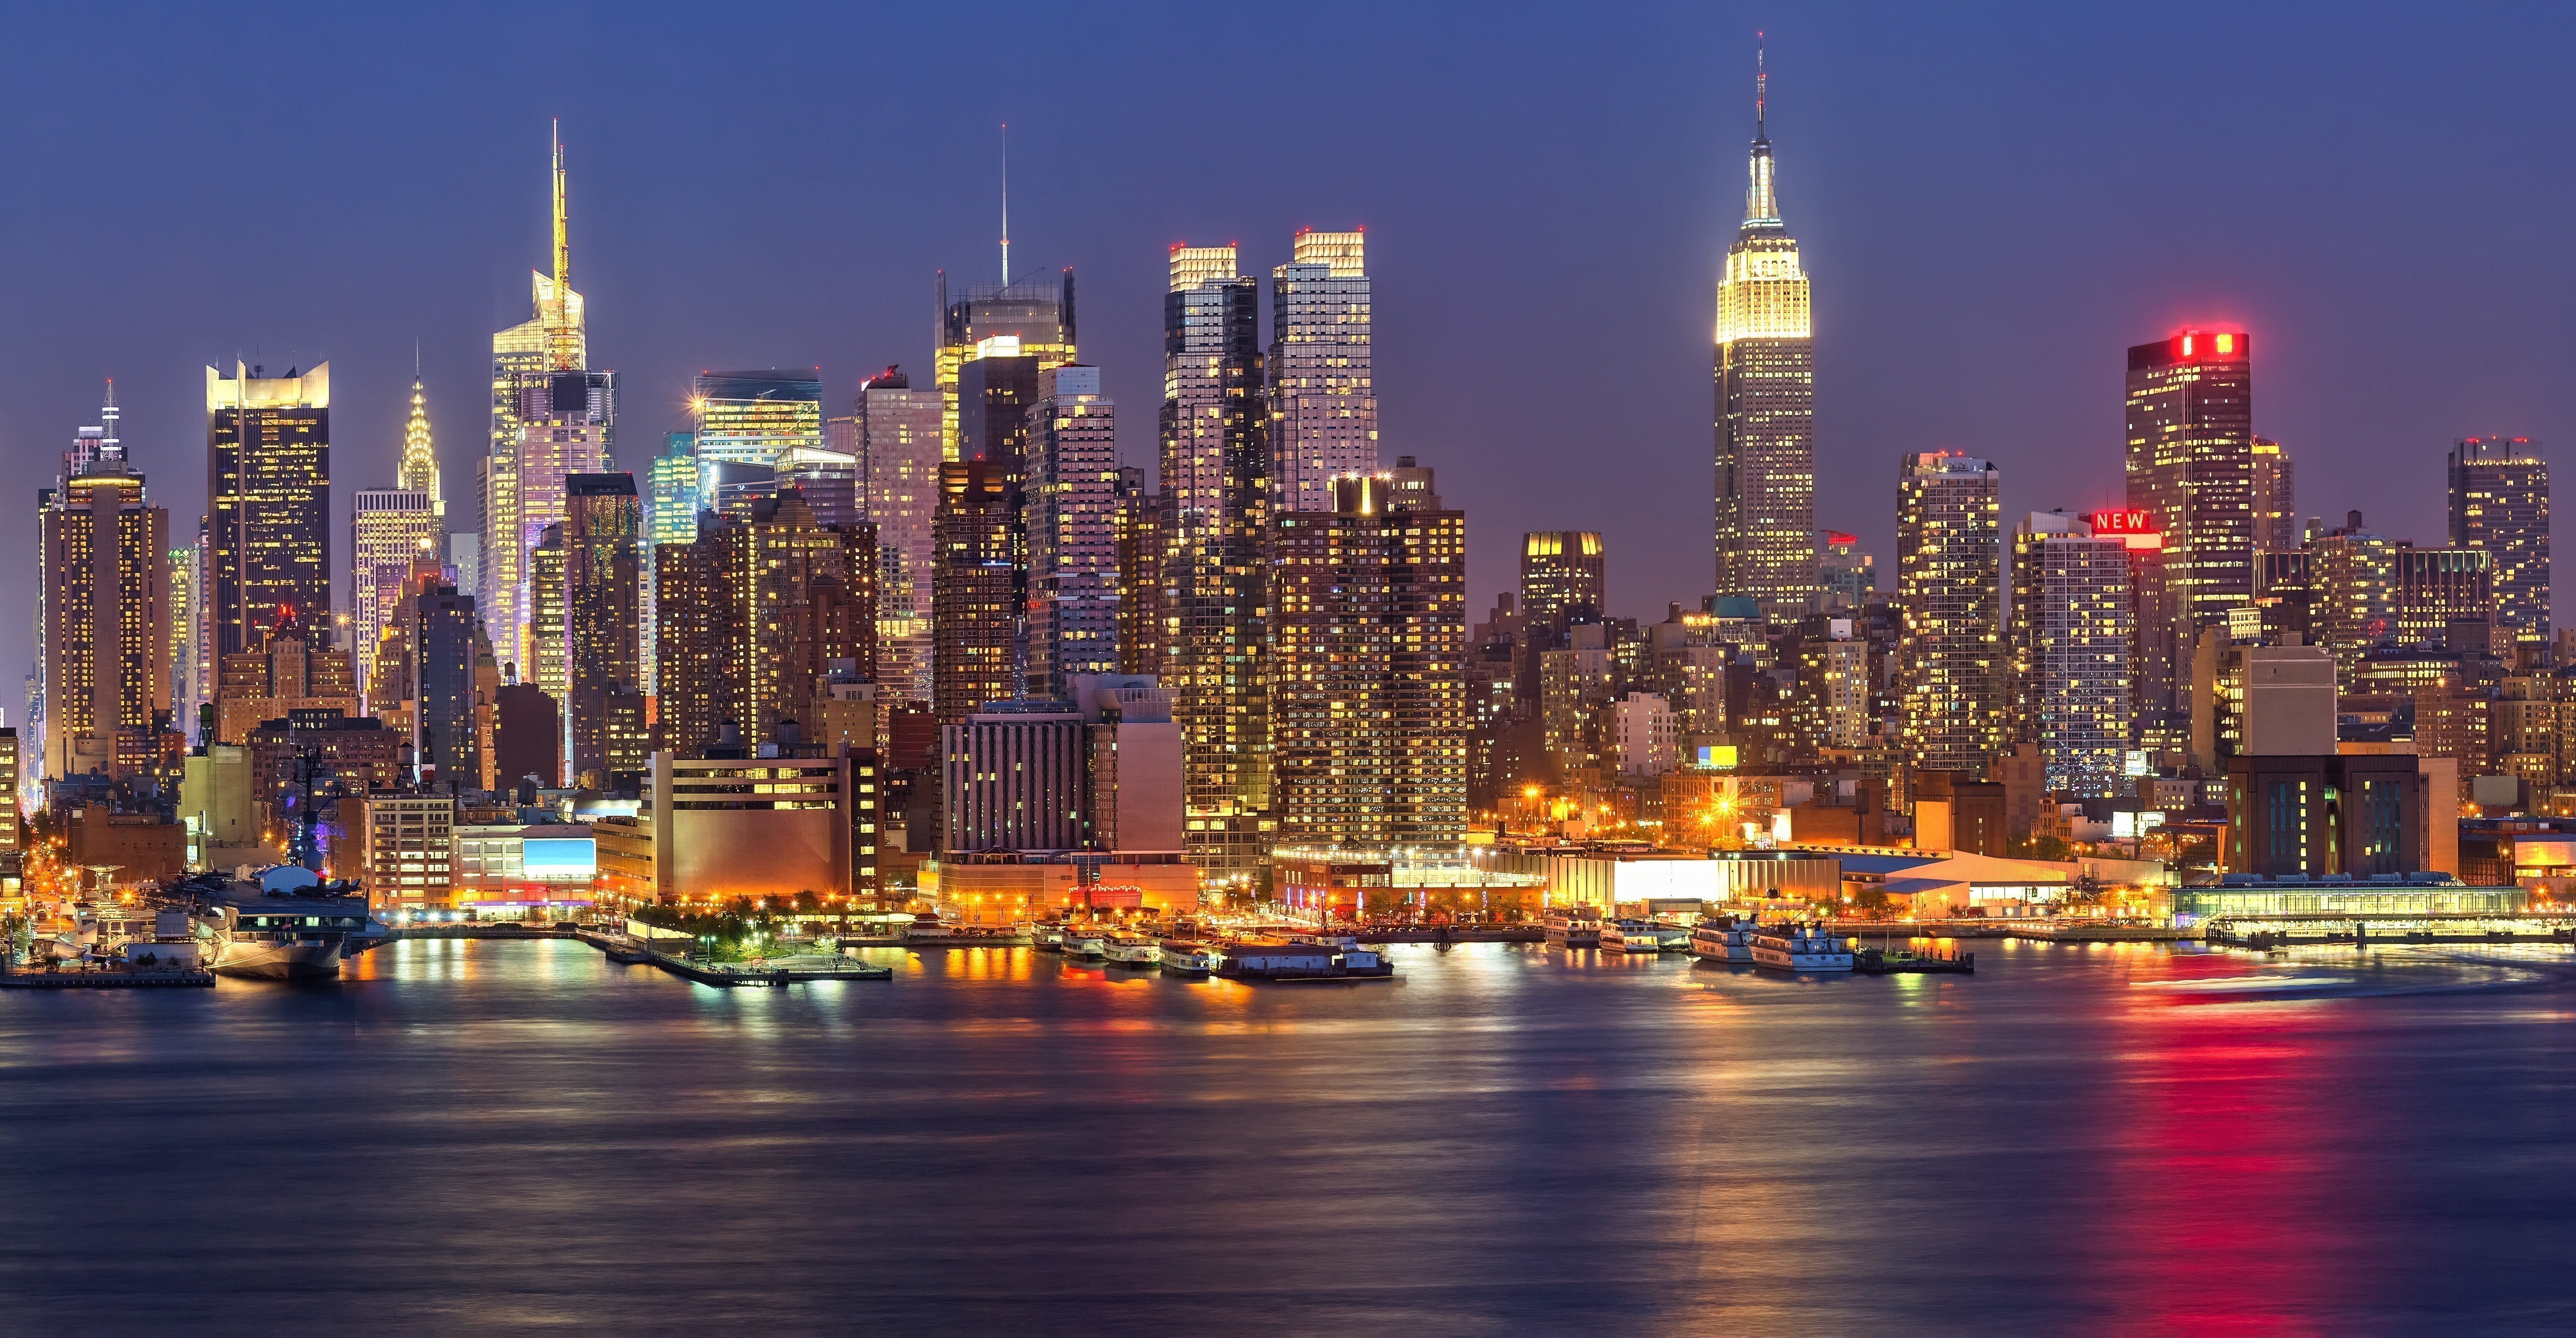 Manhattan at night - New York - Cities - Categories - Canvas Prints